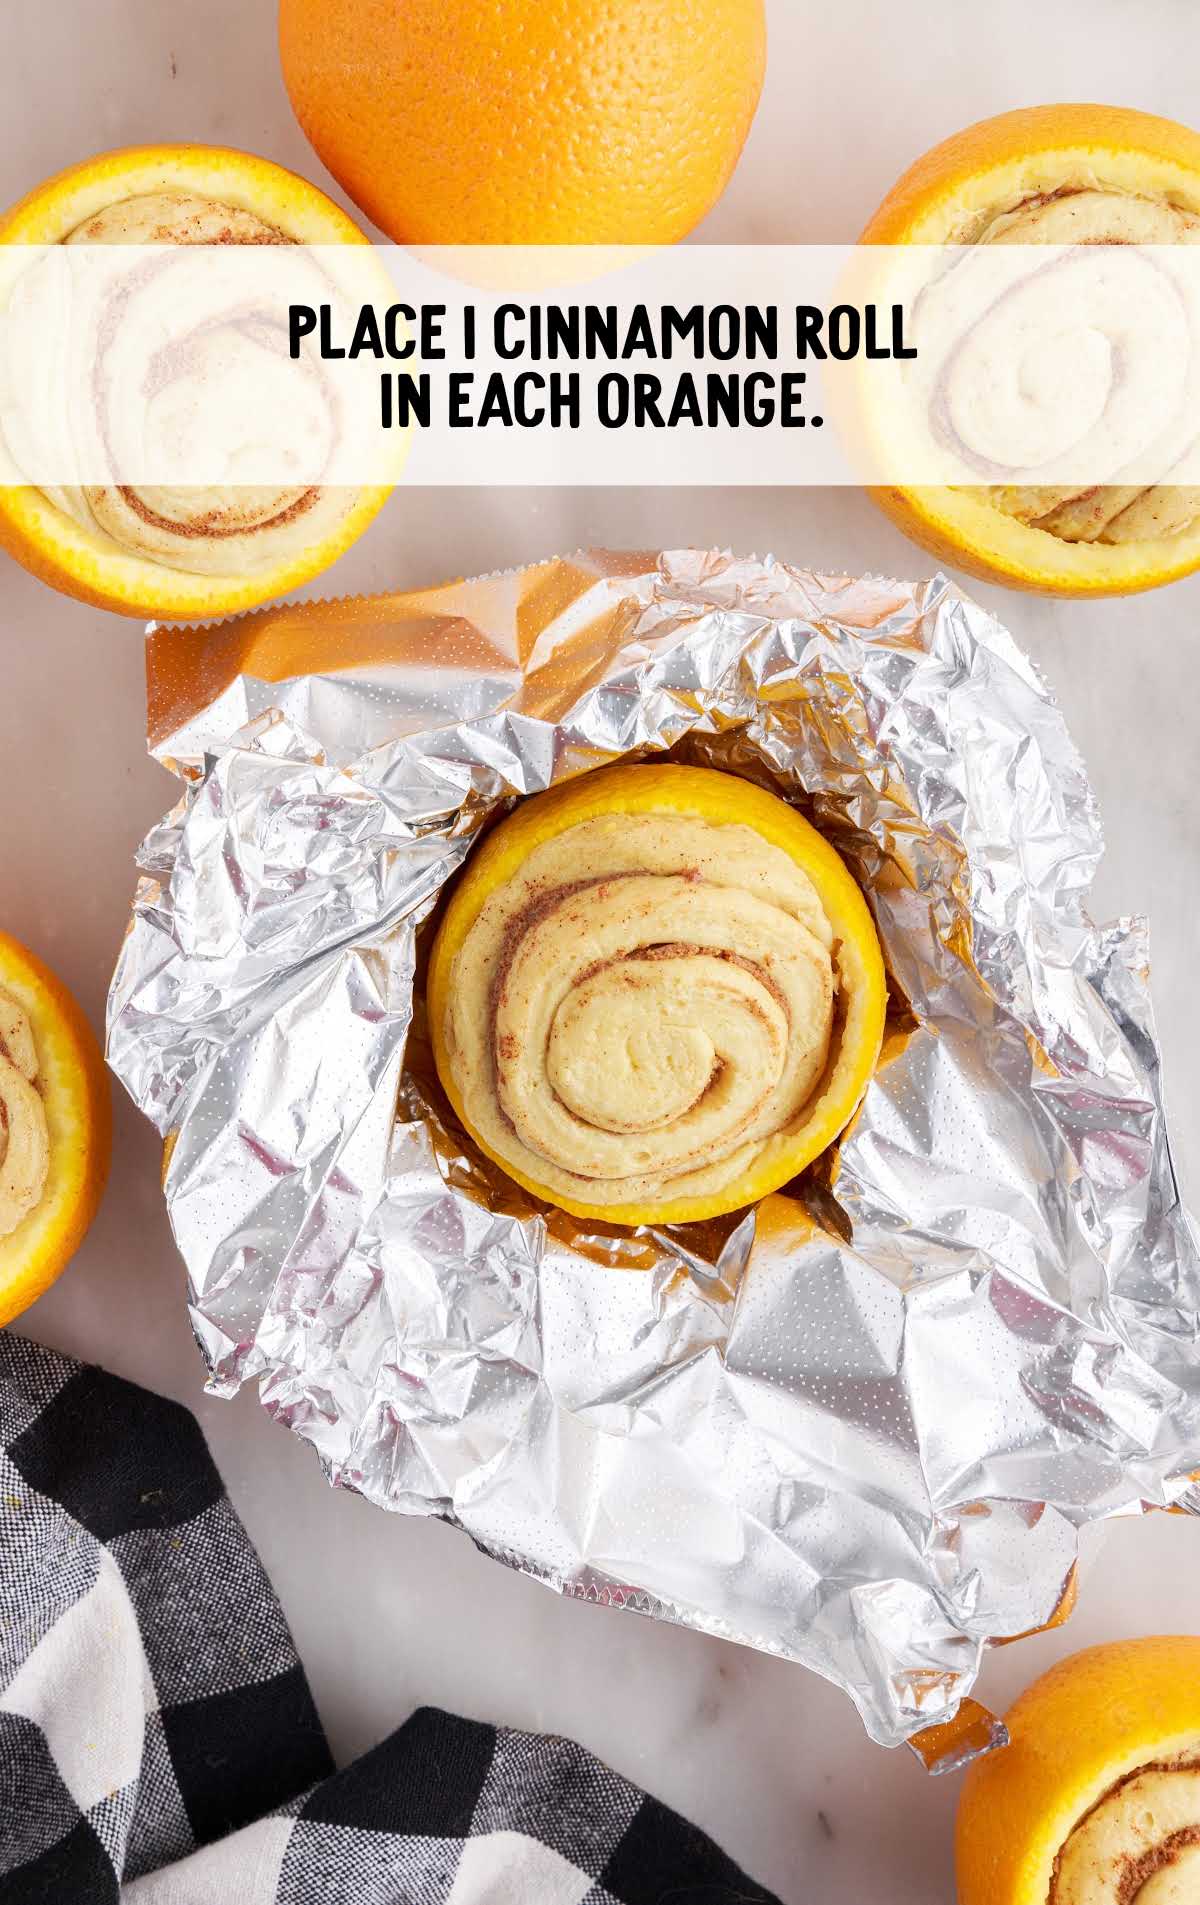 cinnamon roll placed in each orange on aluminum foil